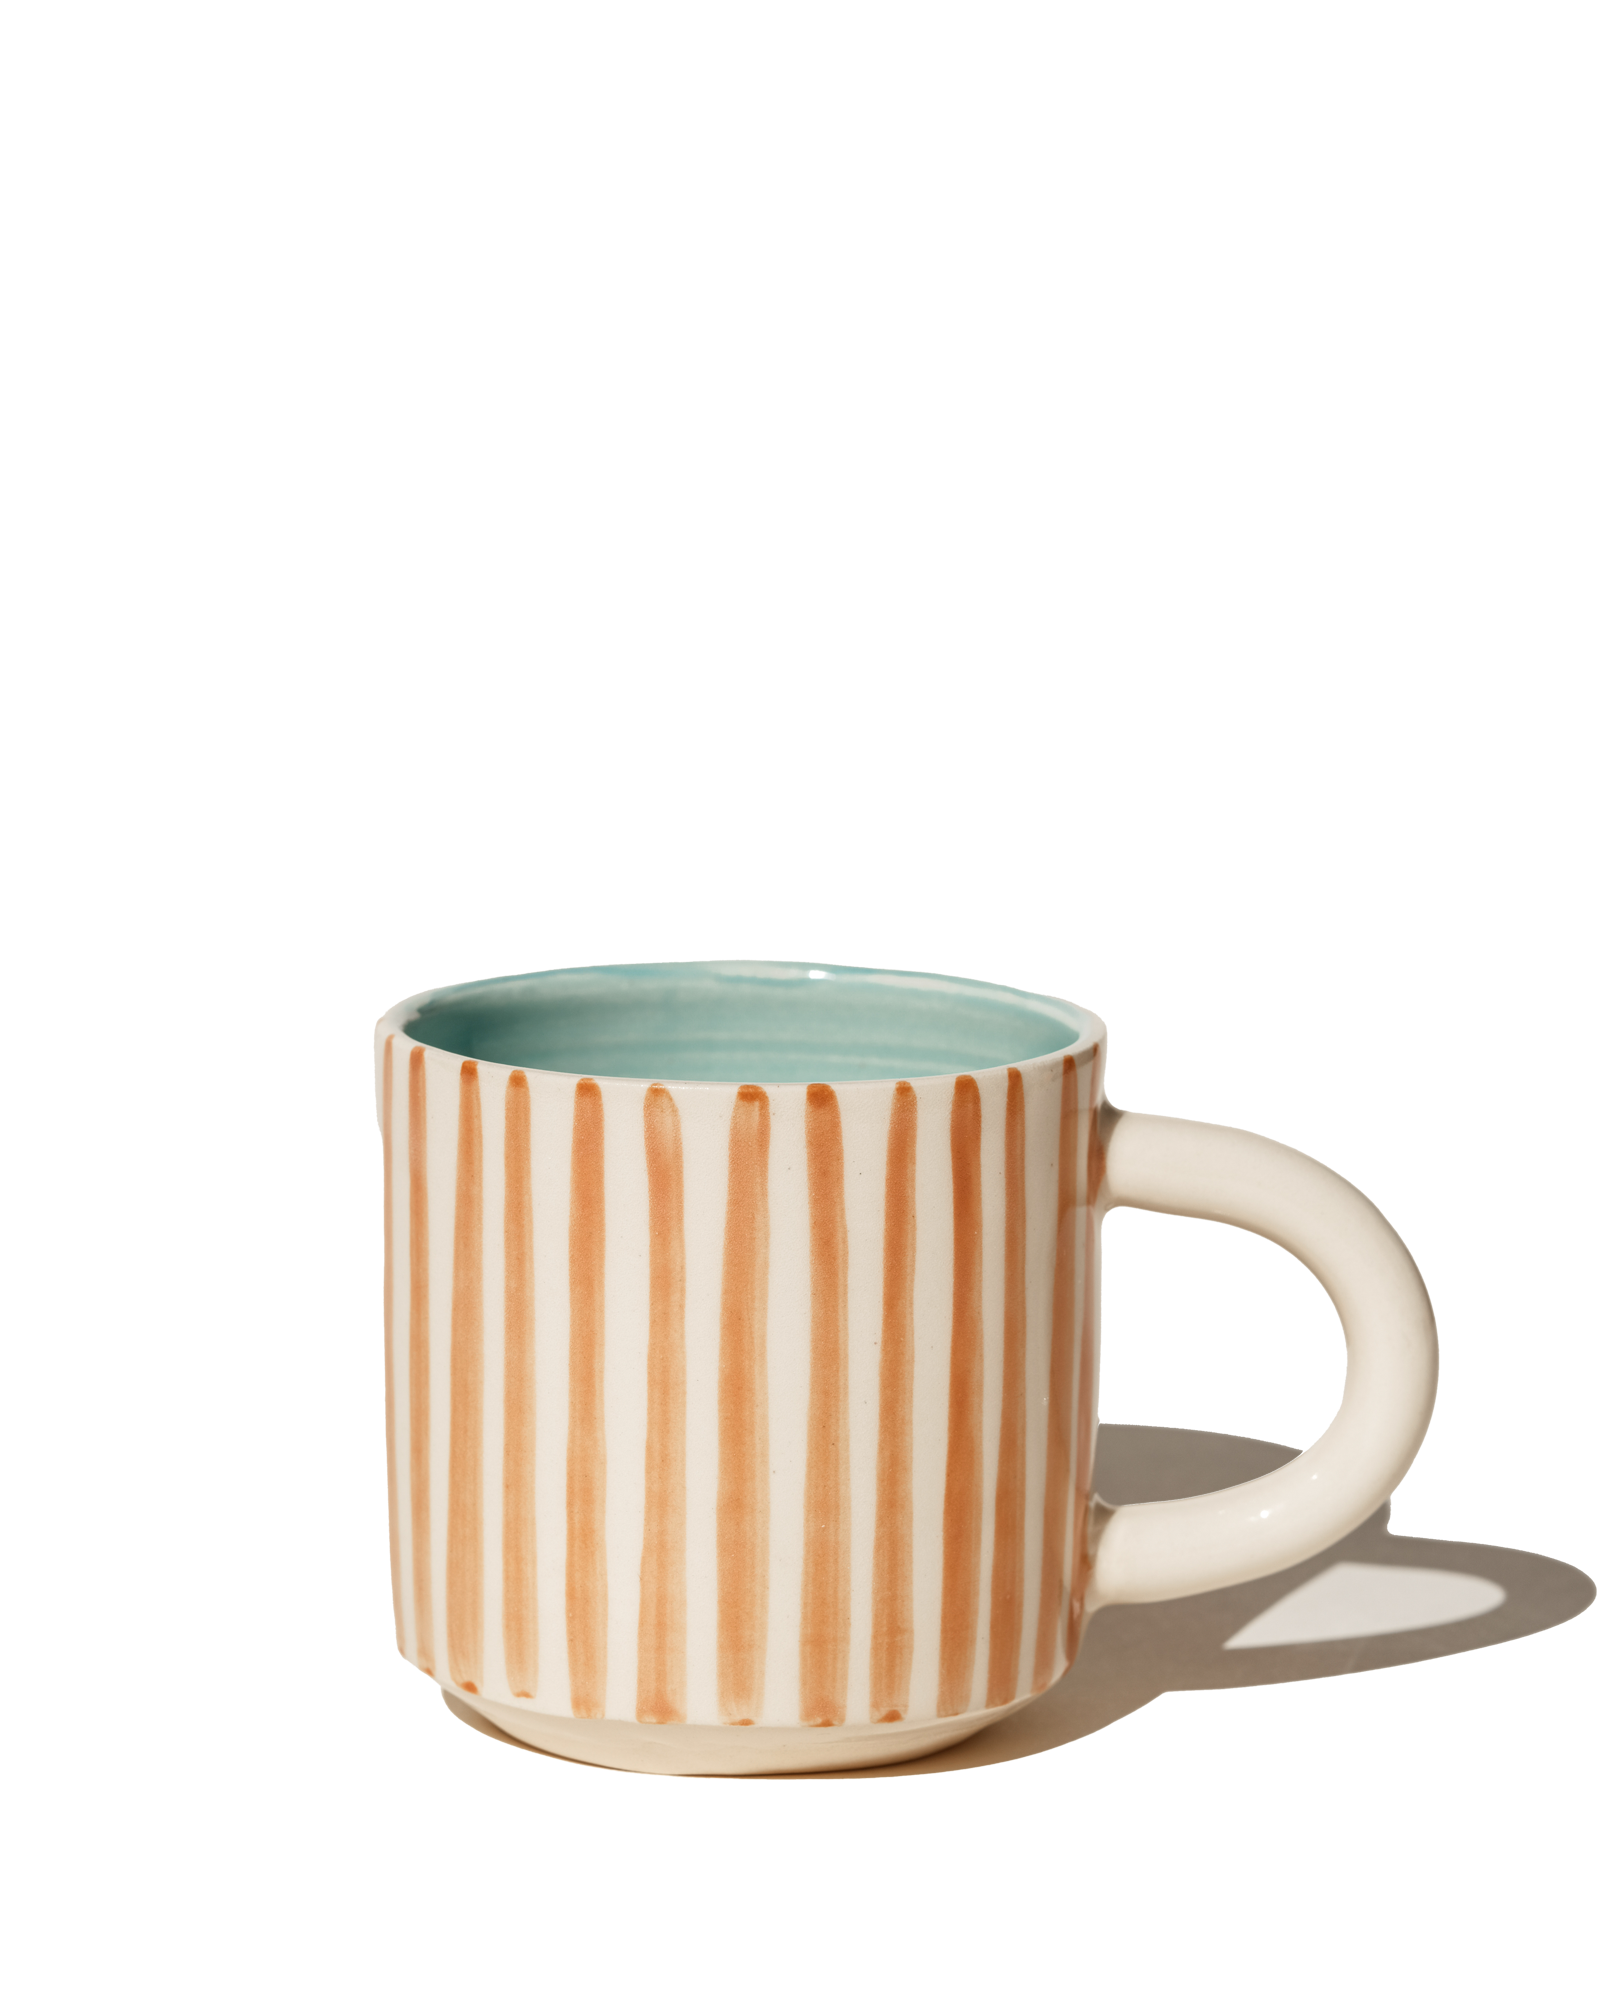 Tan Striped Mug by Pala Ceramics